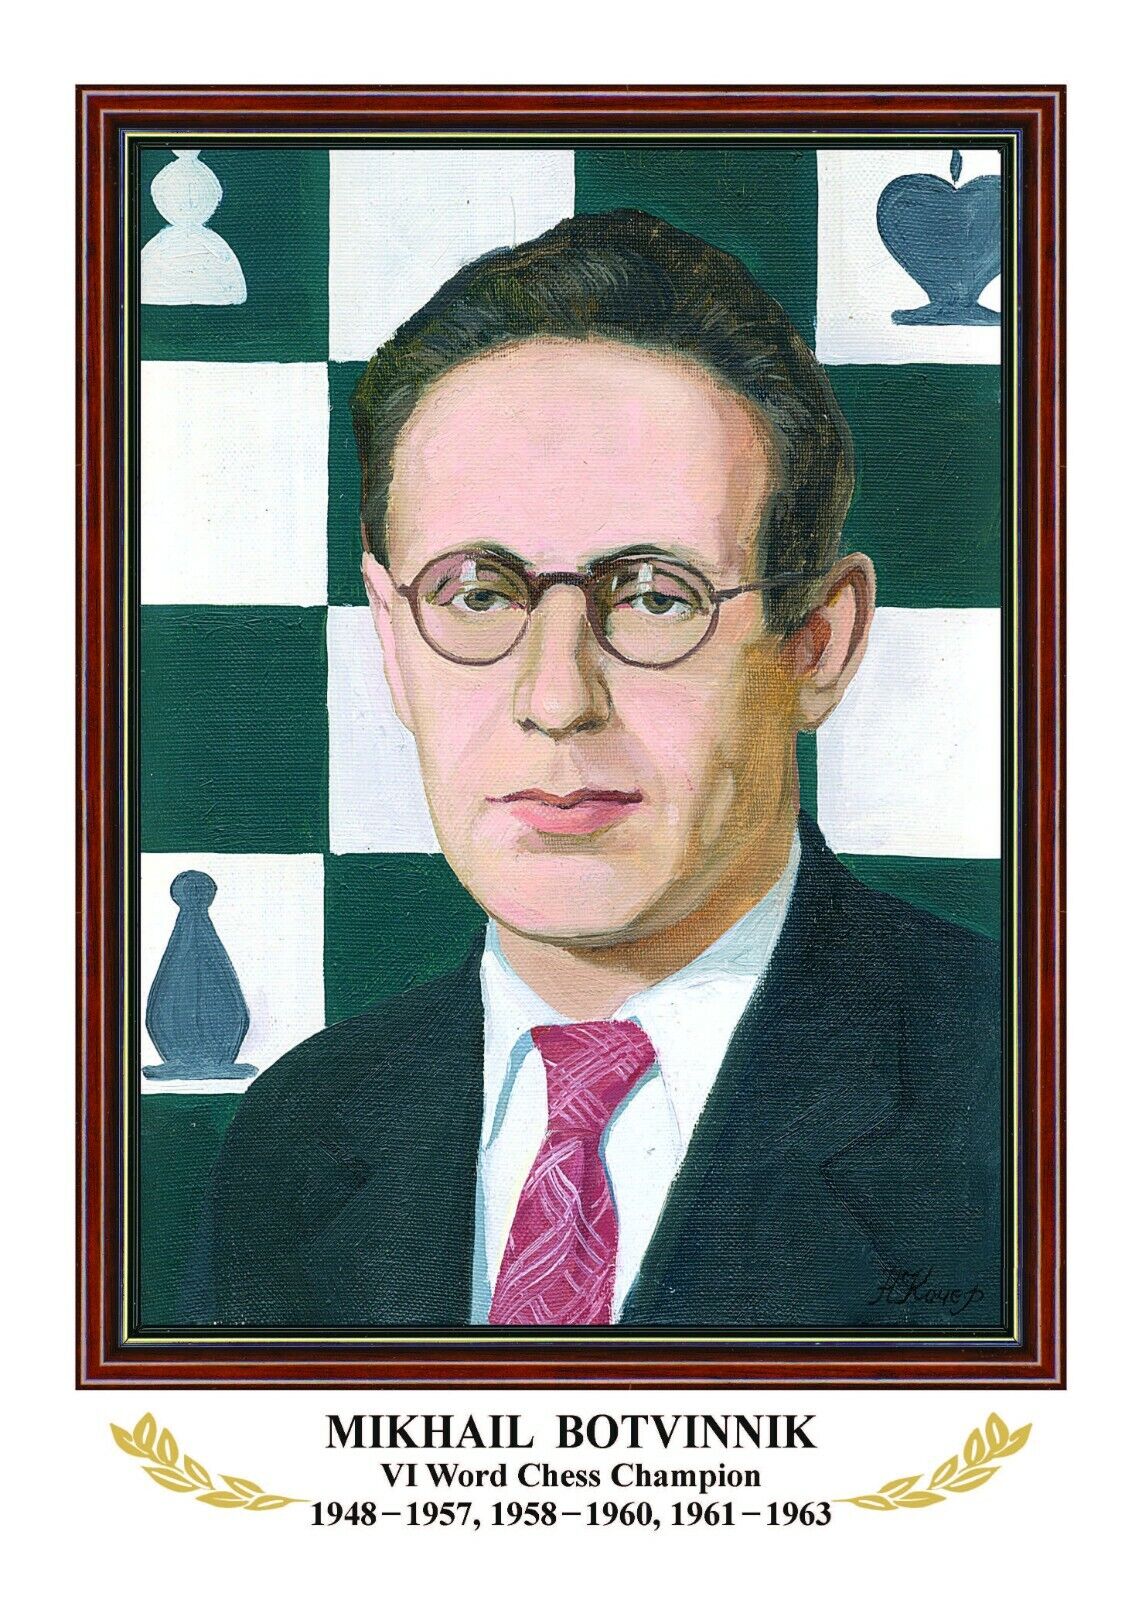 11585.Russian Chess: 16 Wall Portraits: World Chess Champions. 2017. 35x25 cm